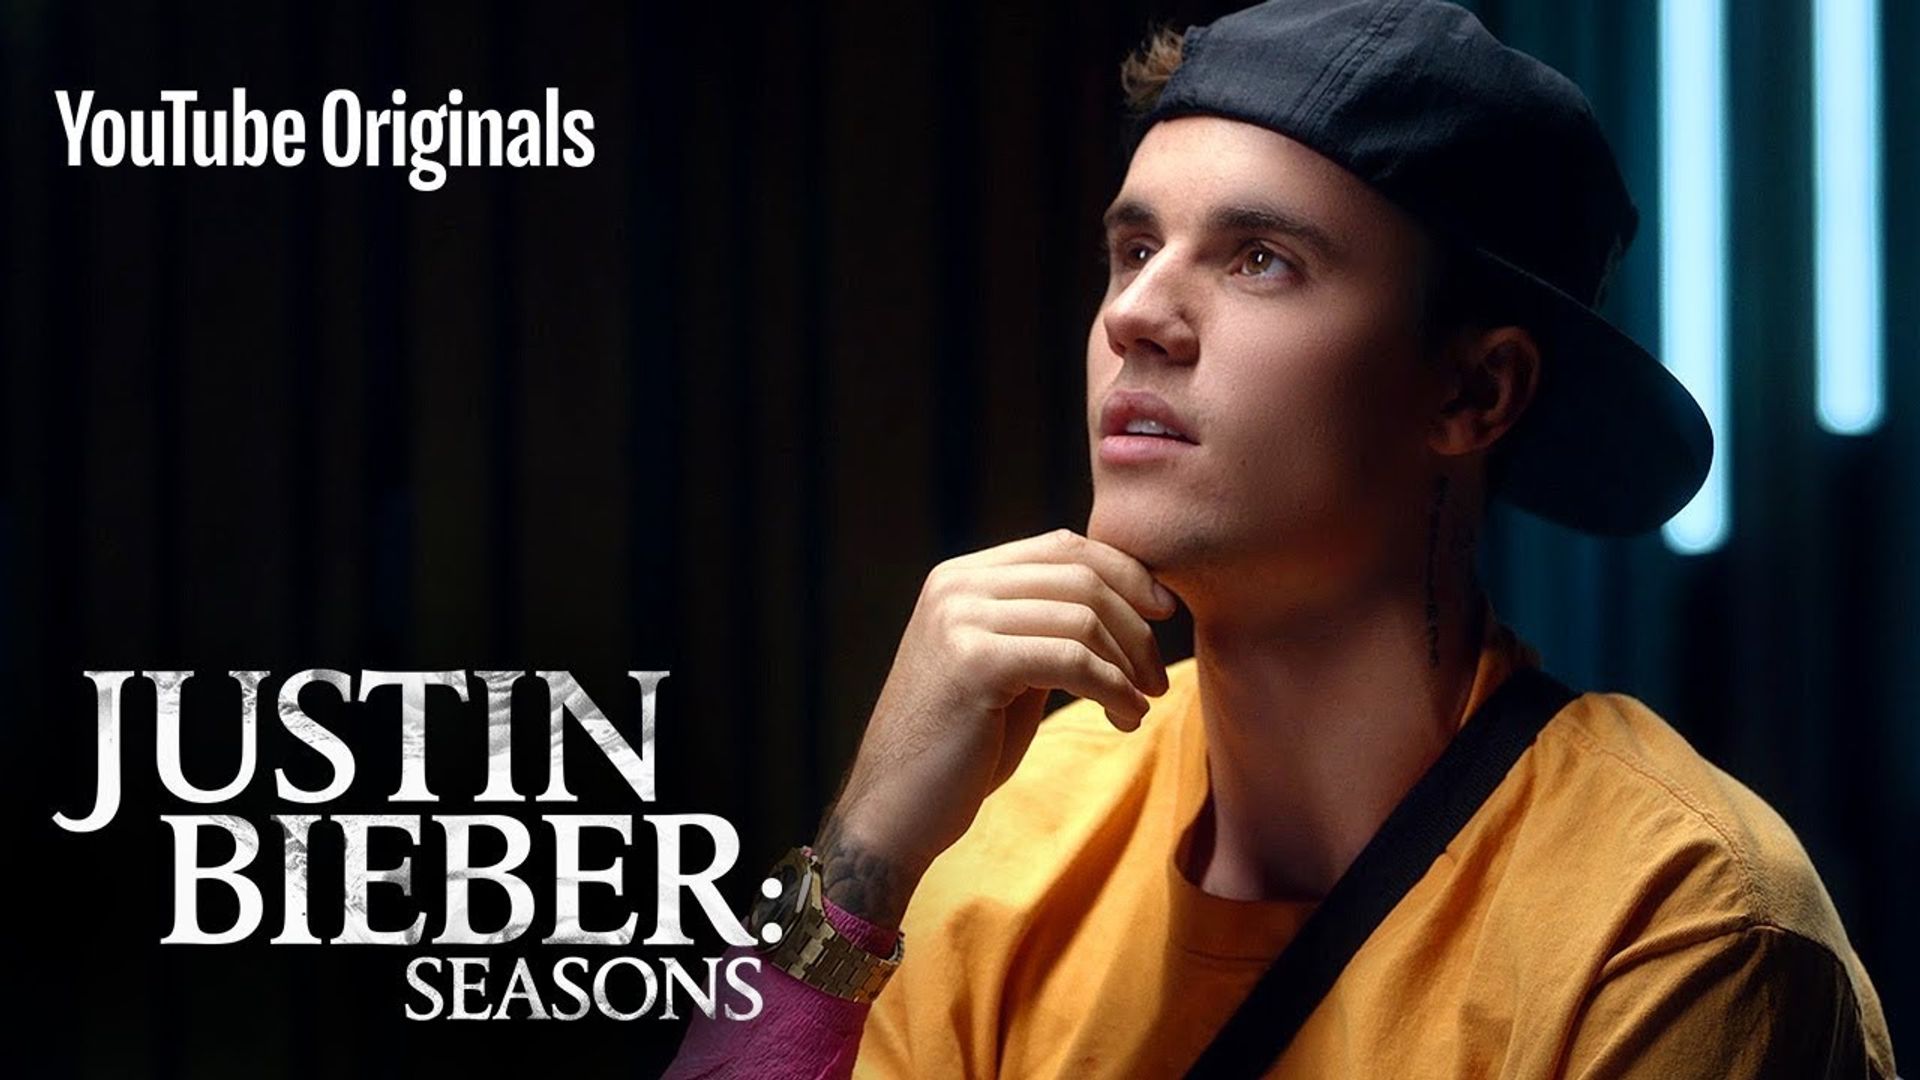 Justin Bieber: Seasons background